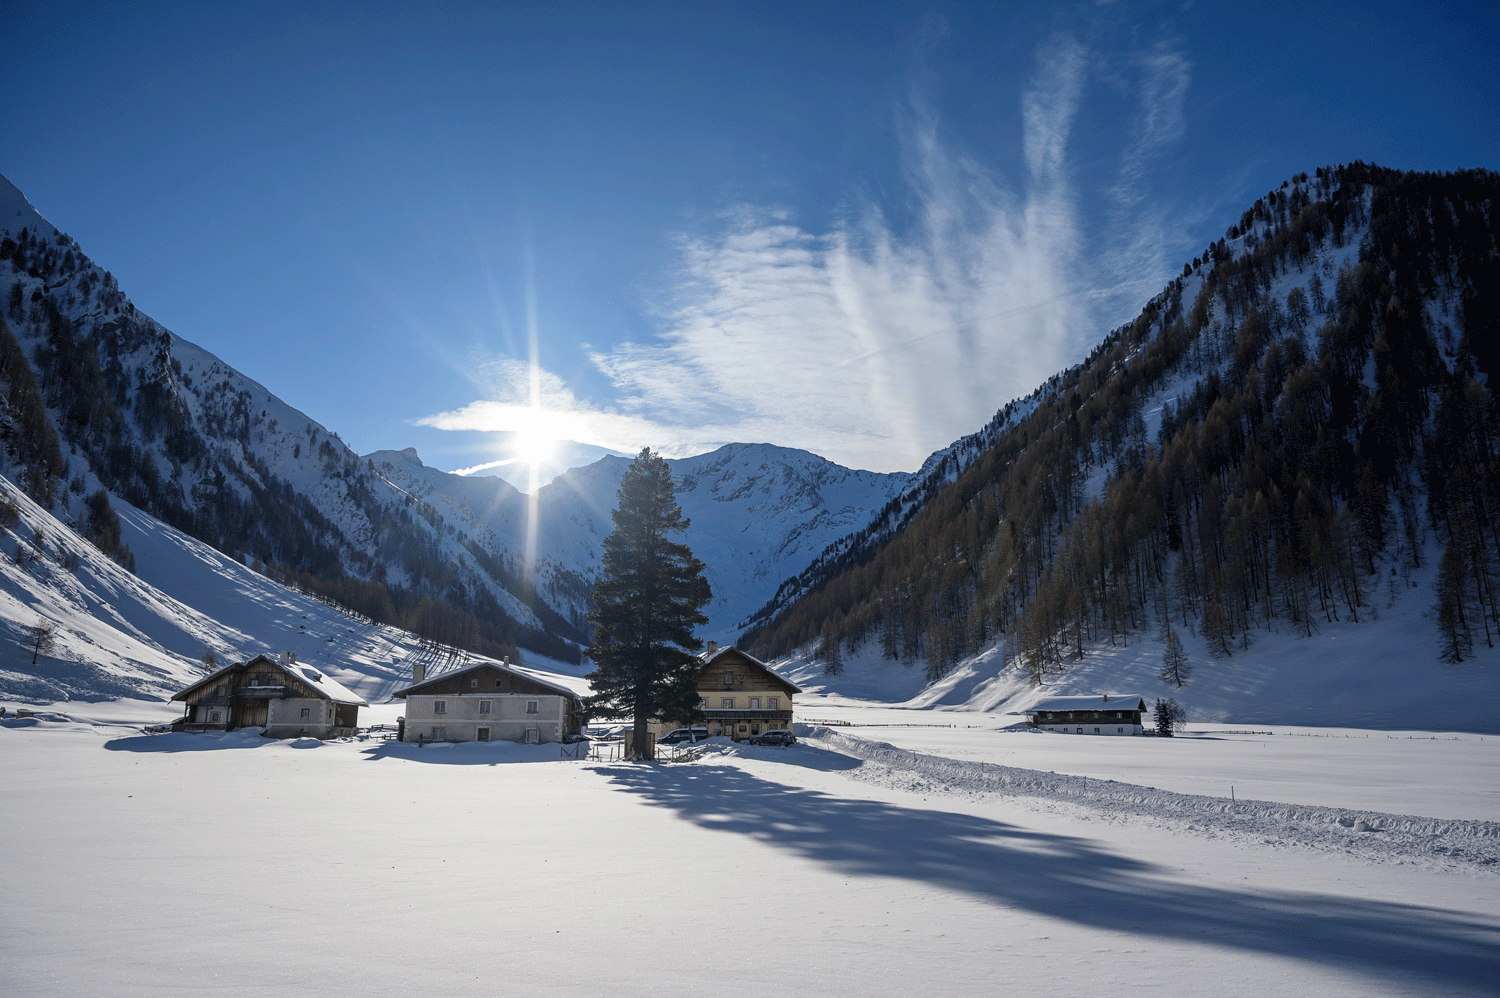 The tiny hamlet of Kasern in winter glory.